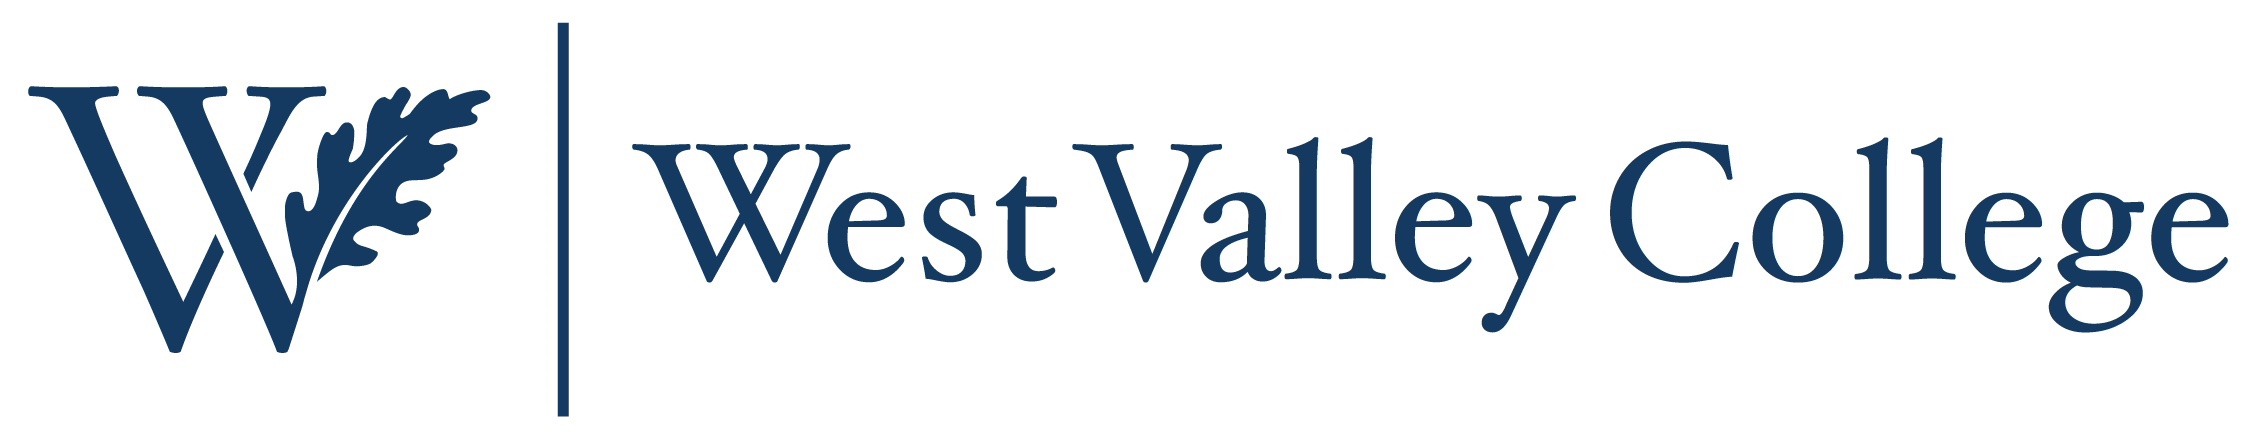 West Valley College Logo Image.